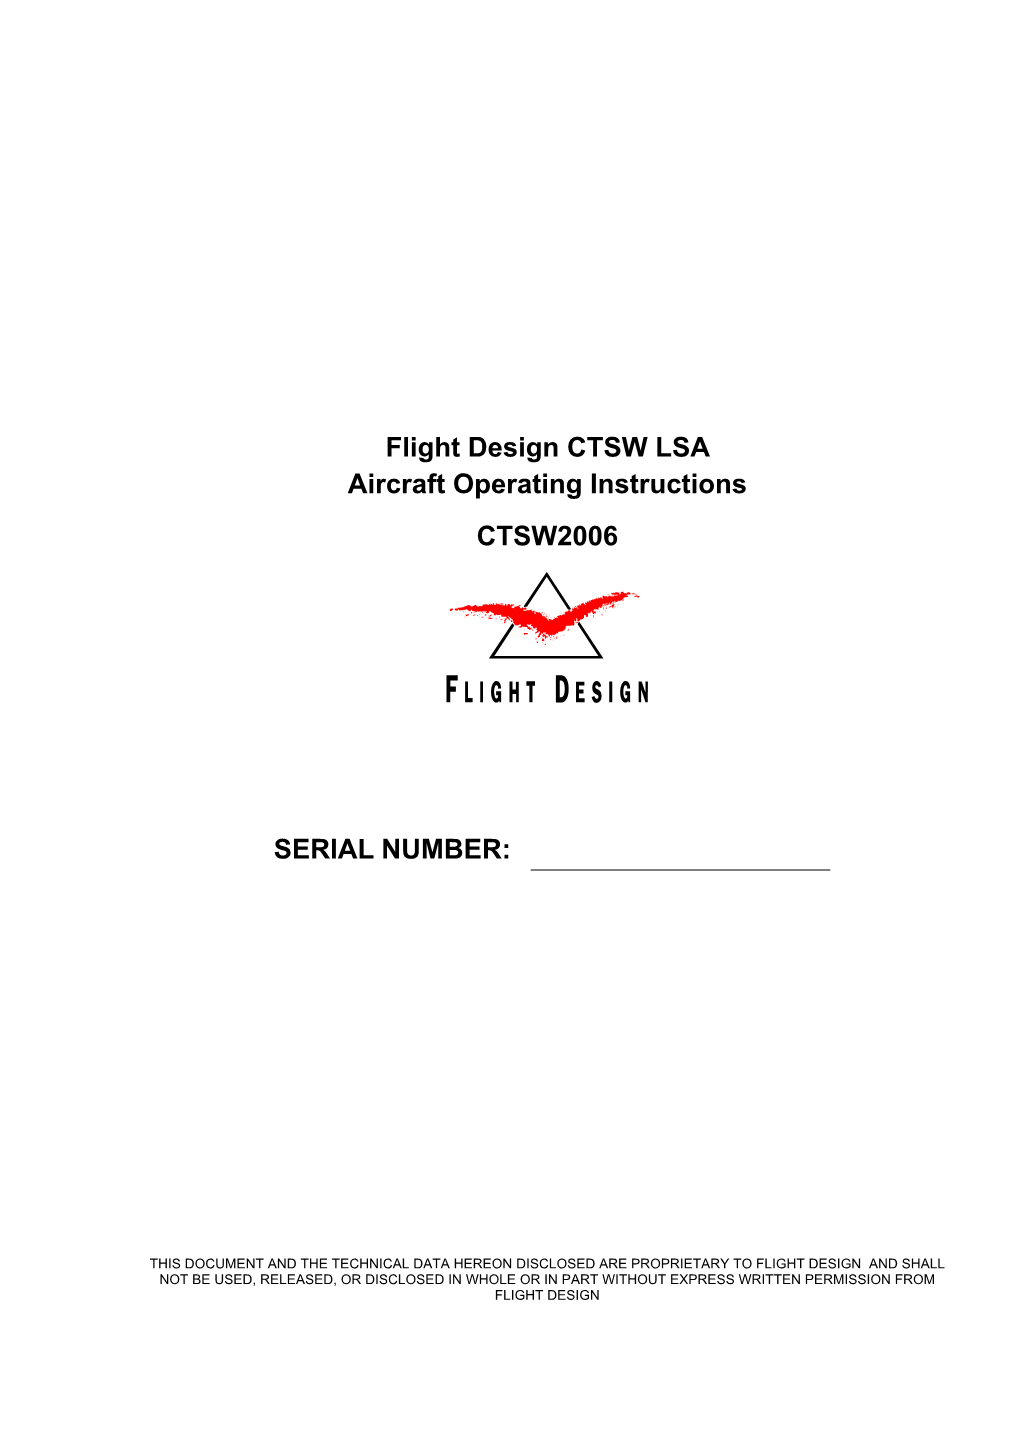 Flight Design CTSW LSA Aircraft Operating Instructions CTSW2006